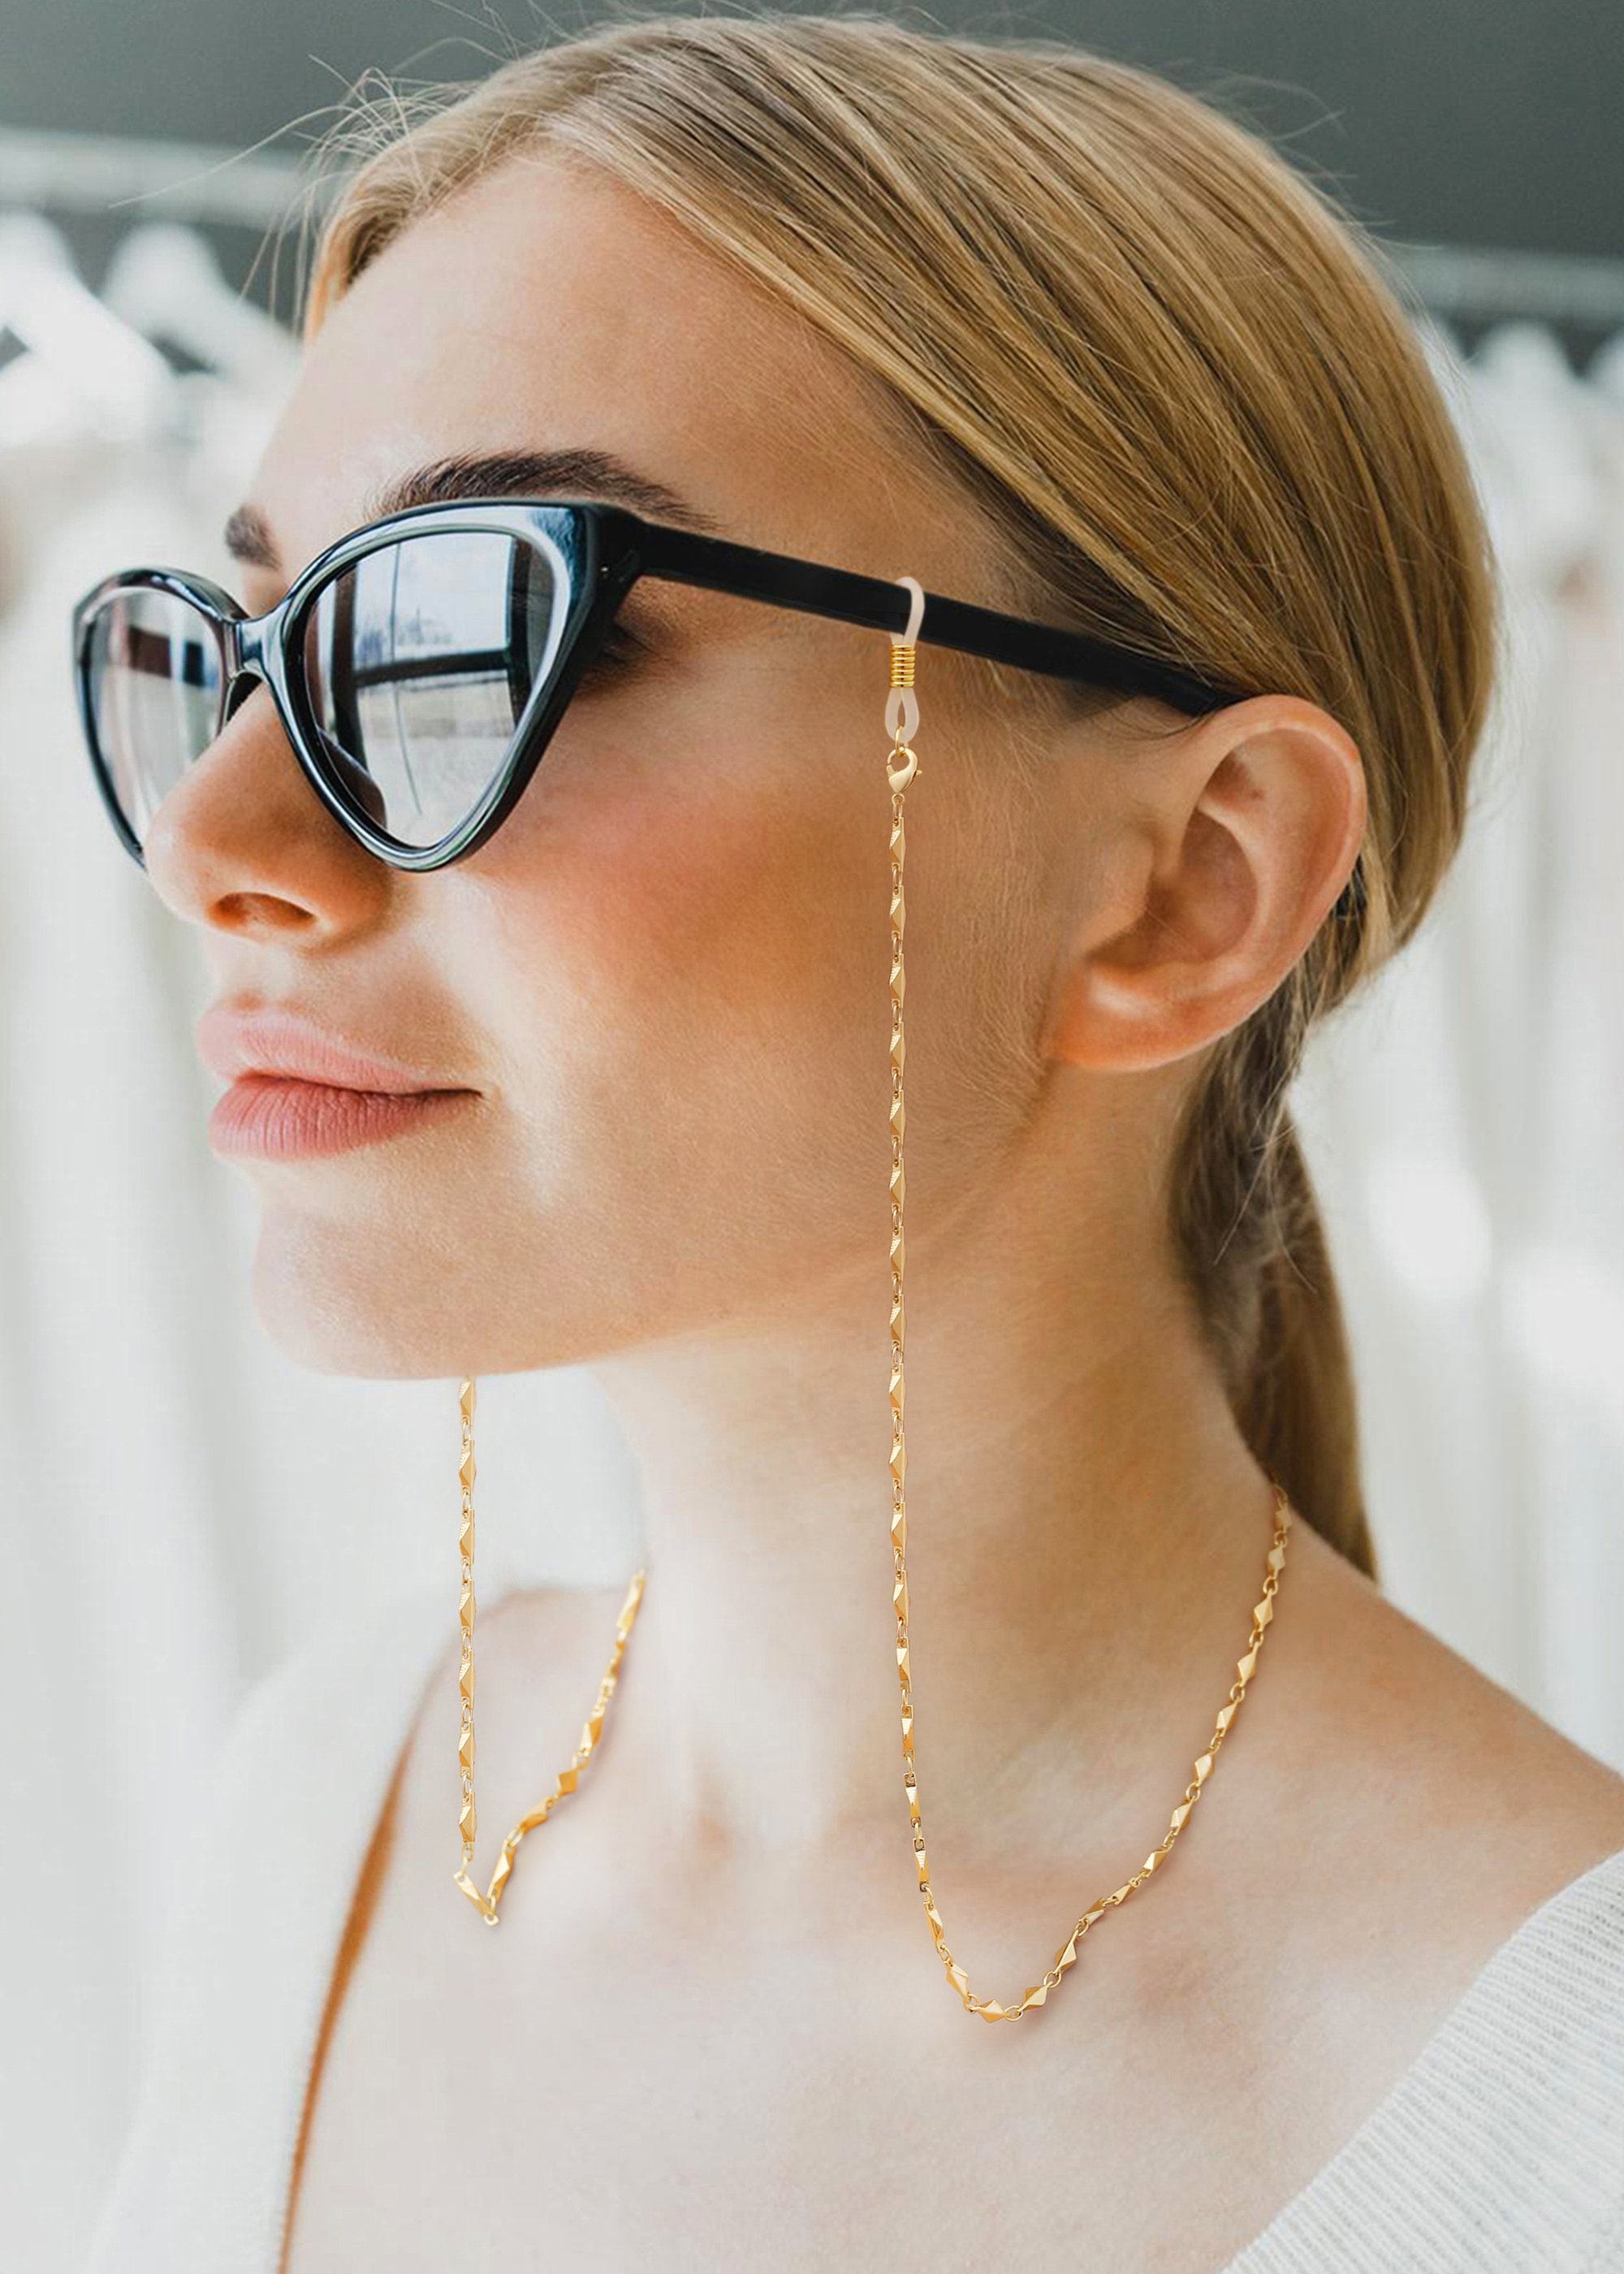 4pcs Fashionable Eyeglass Chains For Women